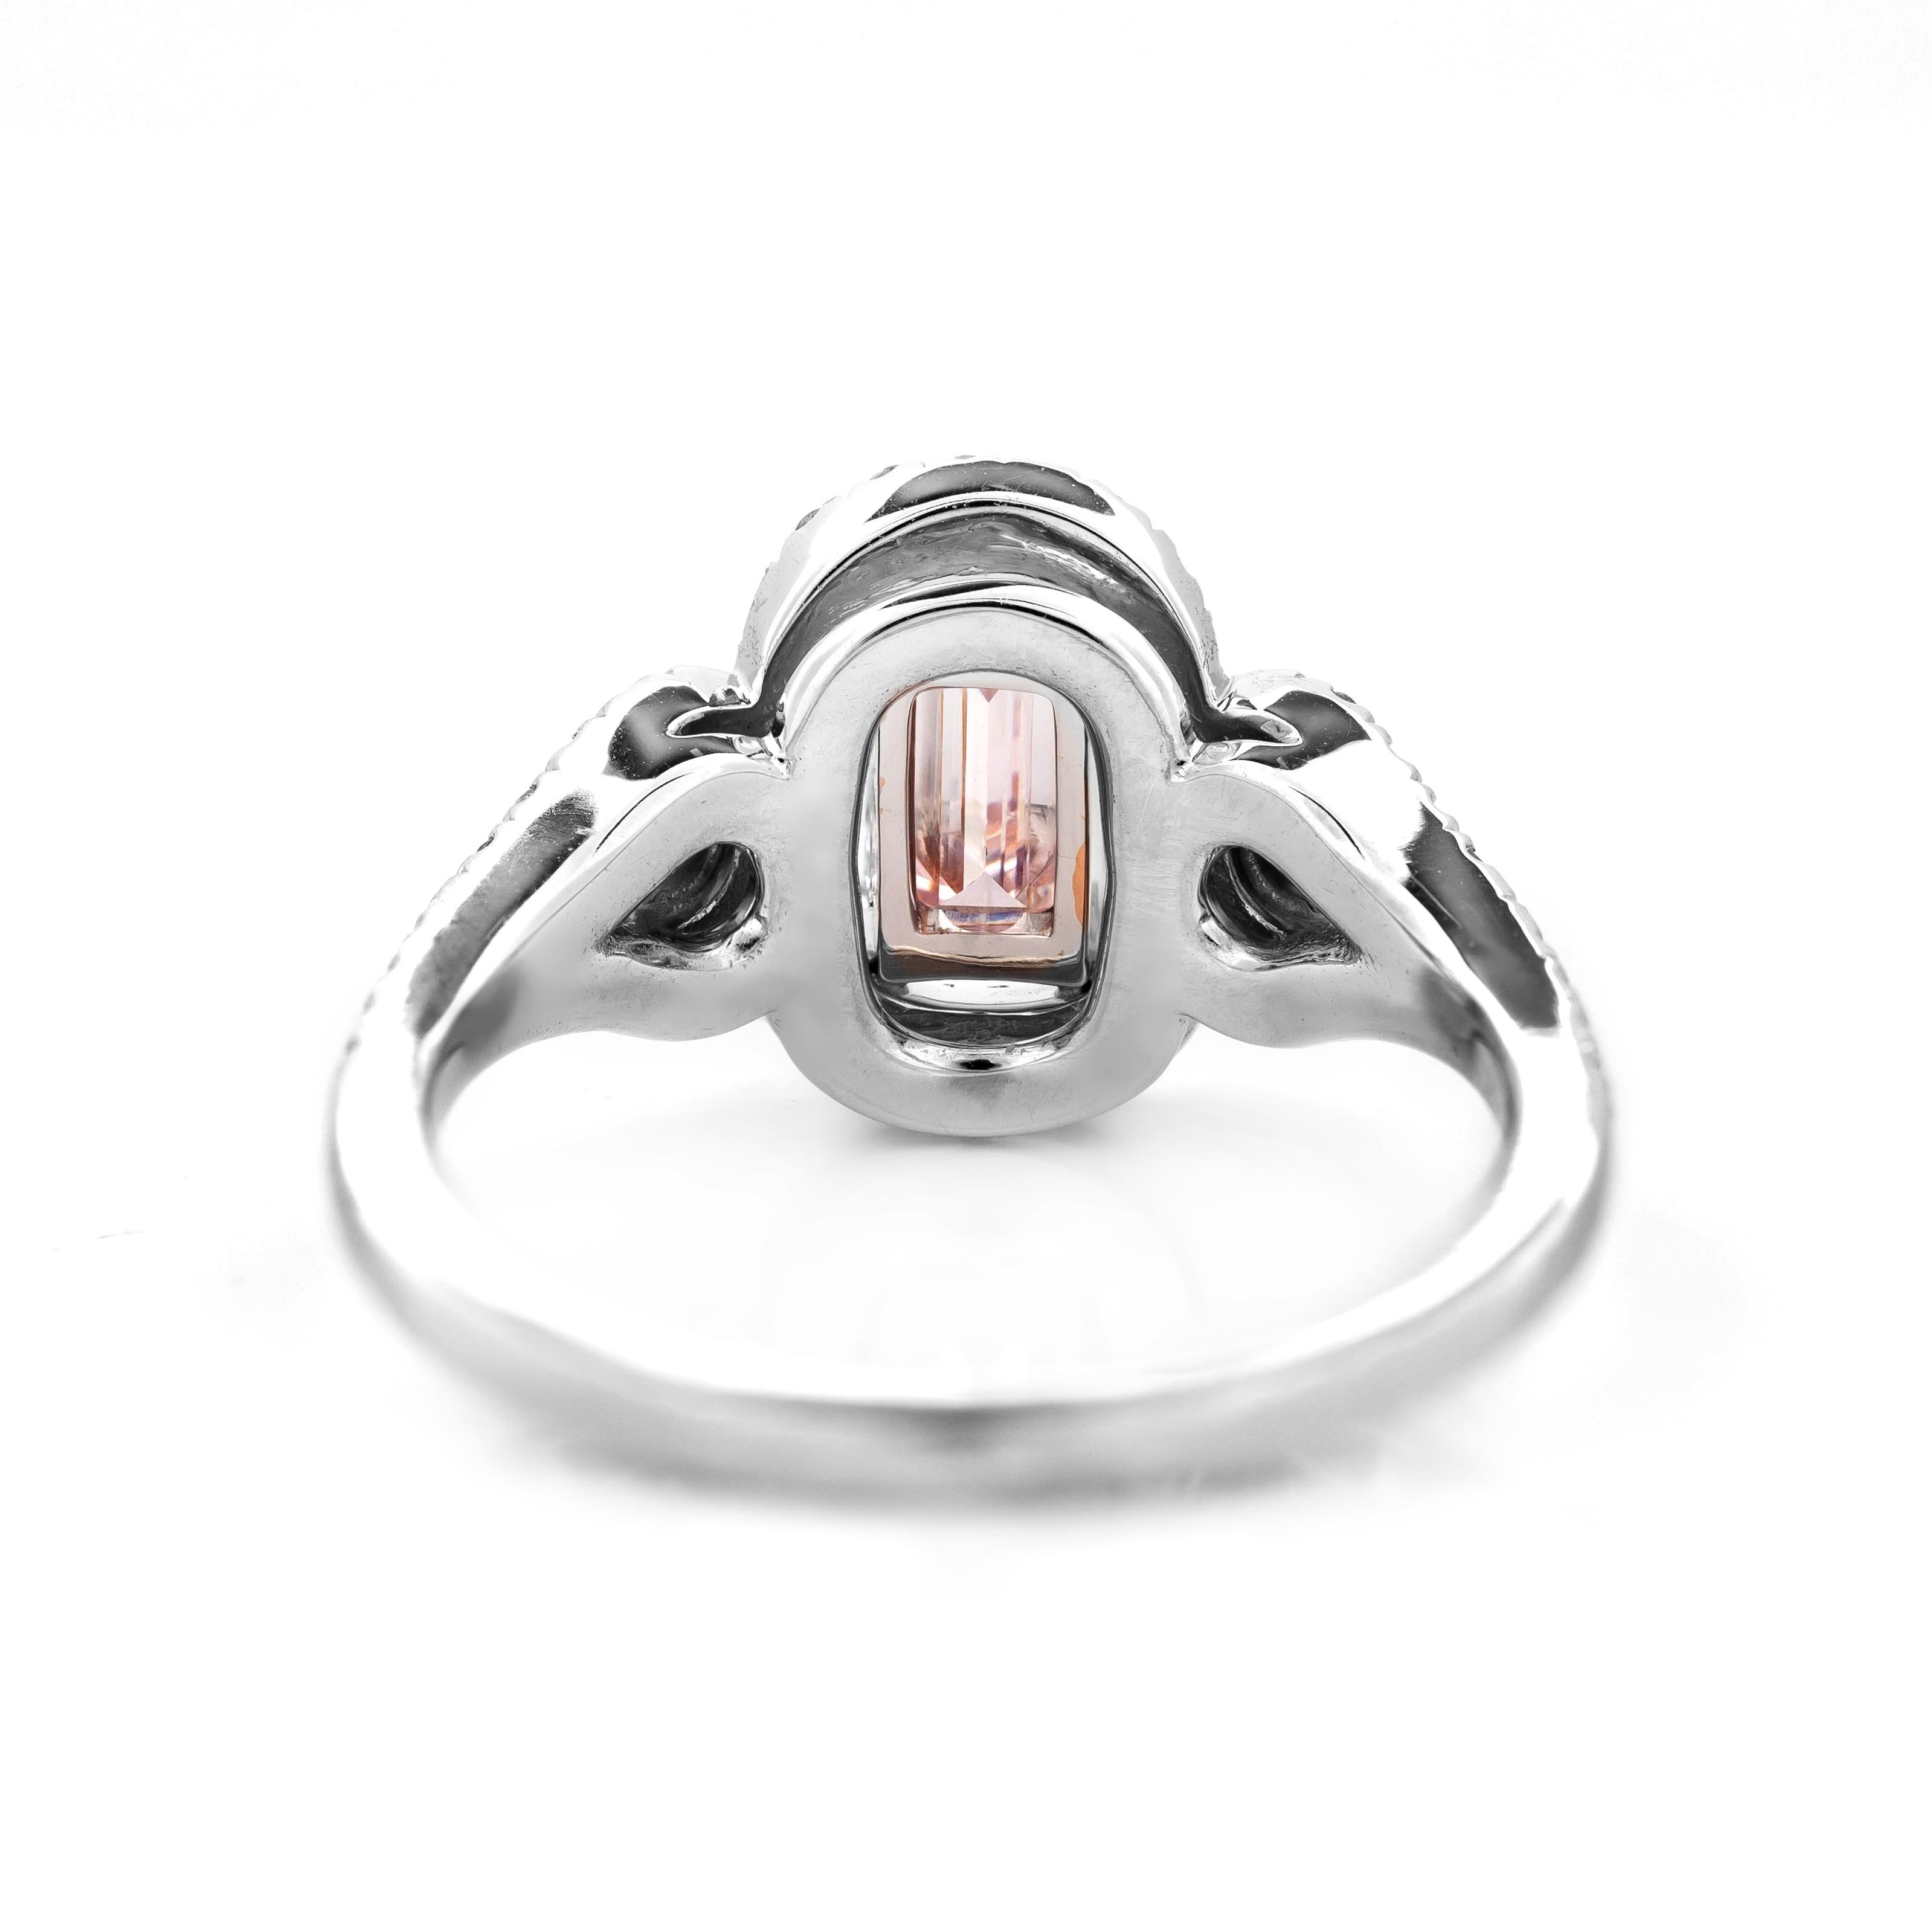 0.83 Carat Fancy Pink Diamond Ring Certified by HRD Antwerp and GWlabs 2